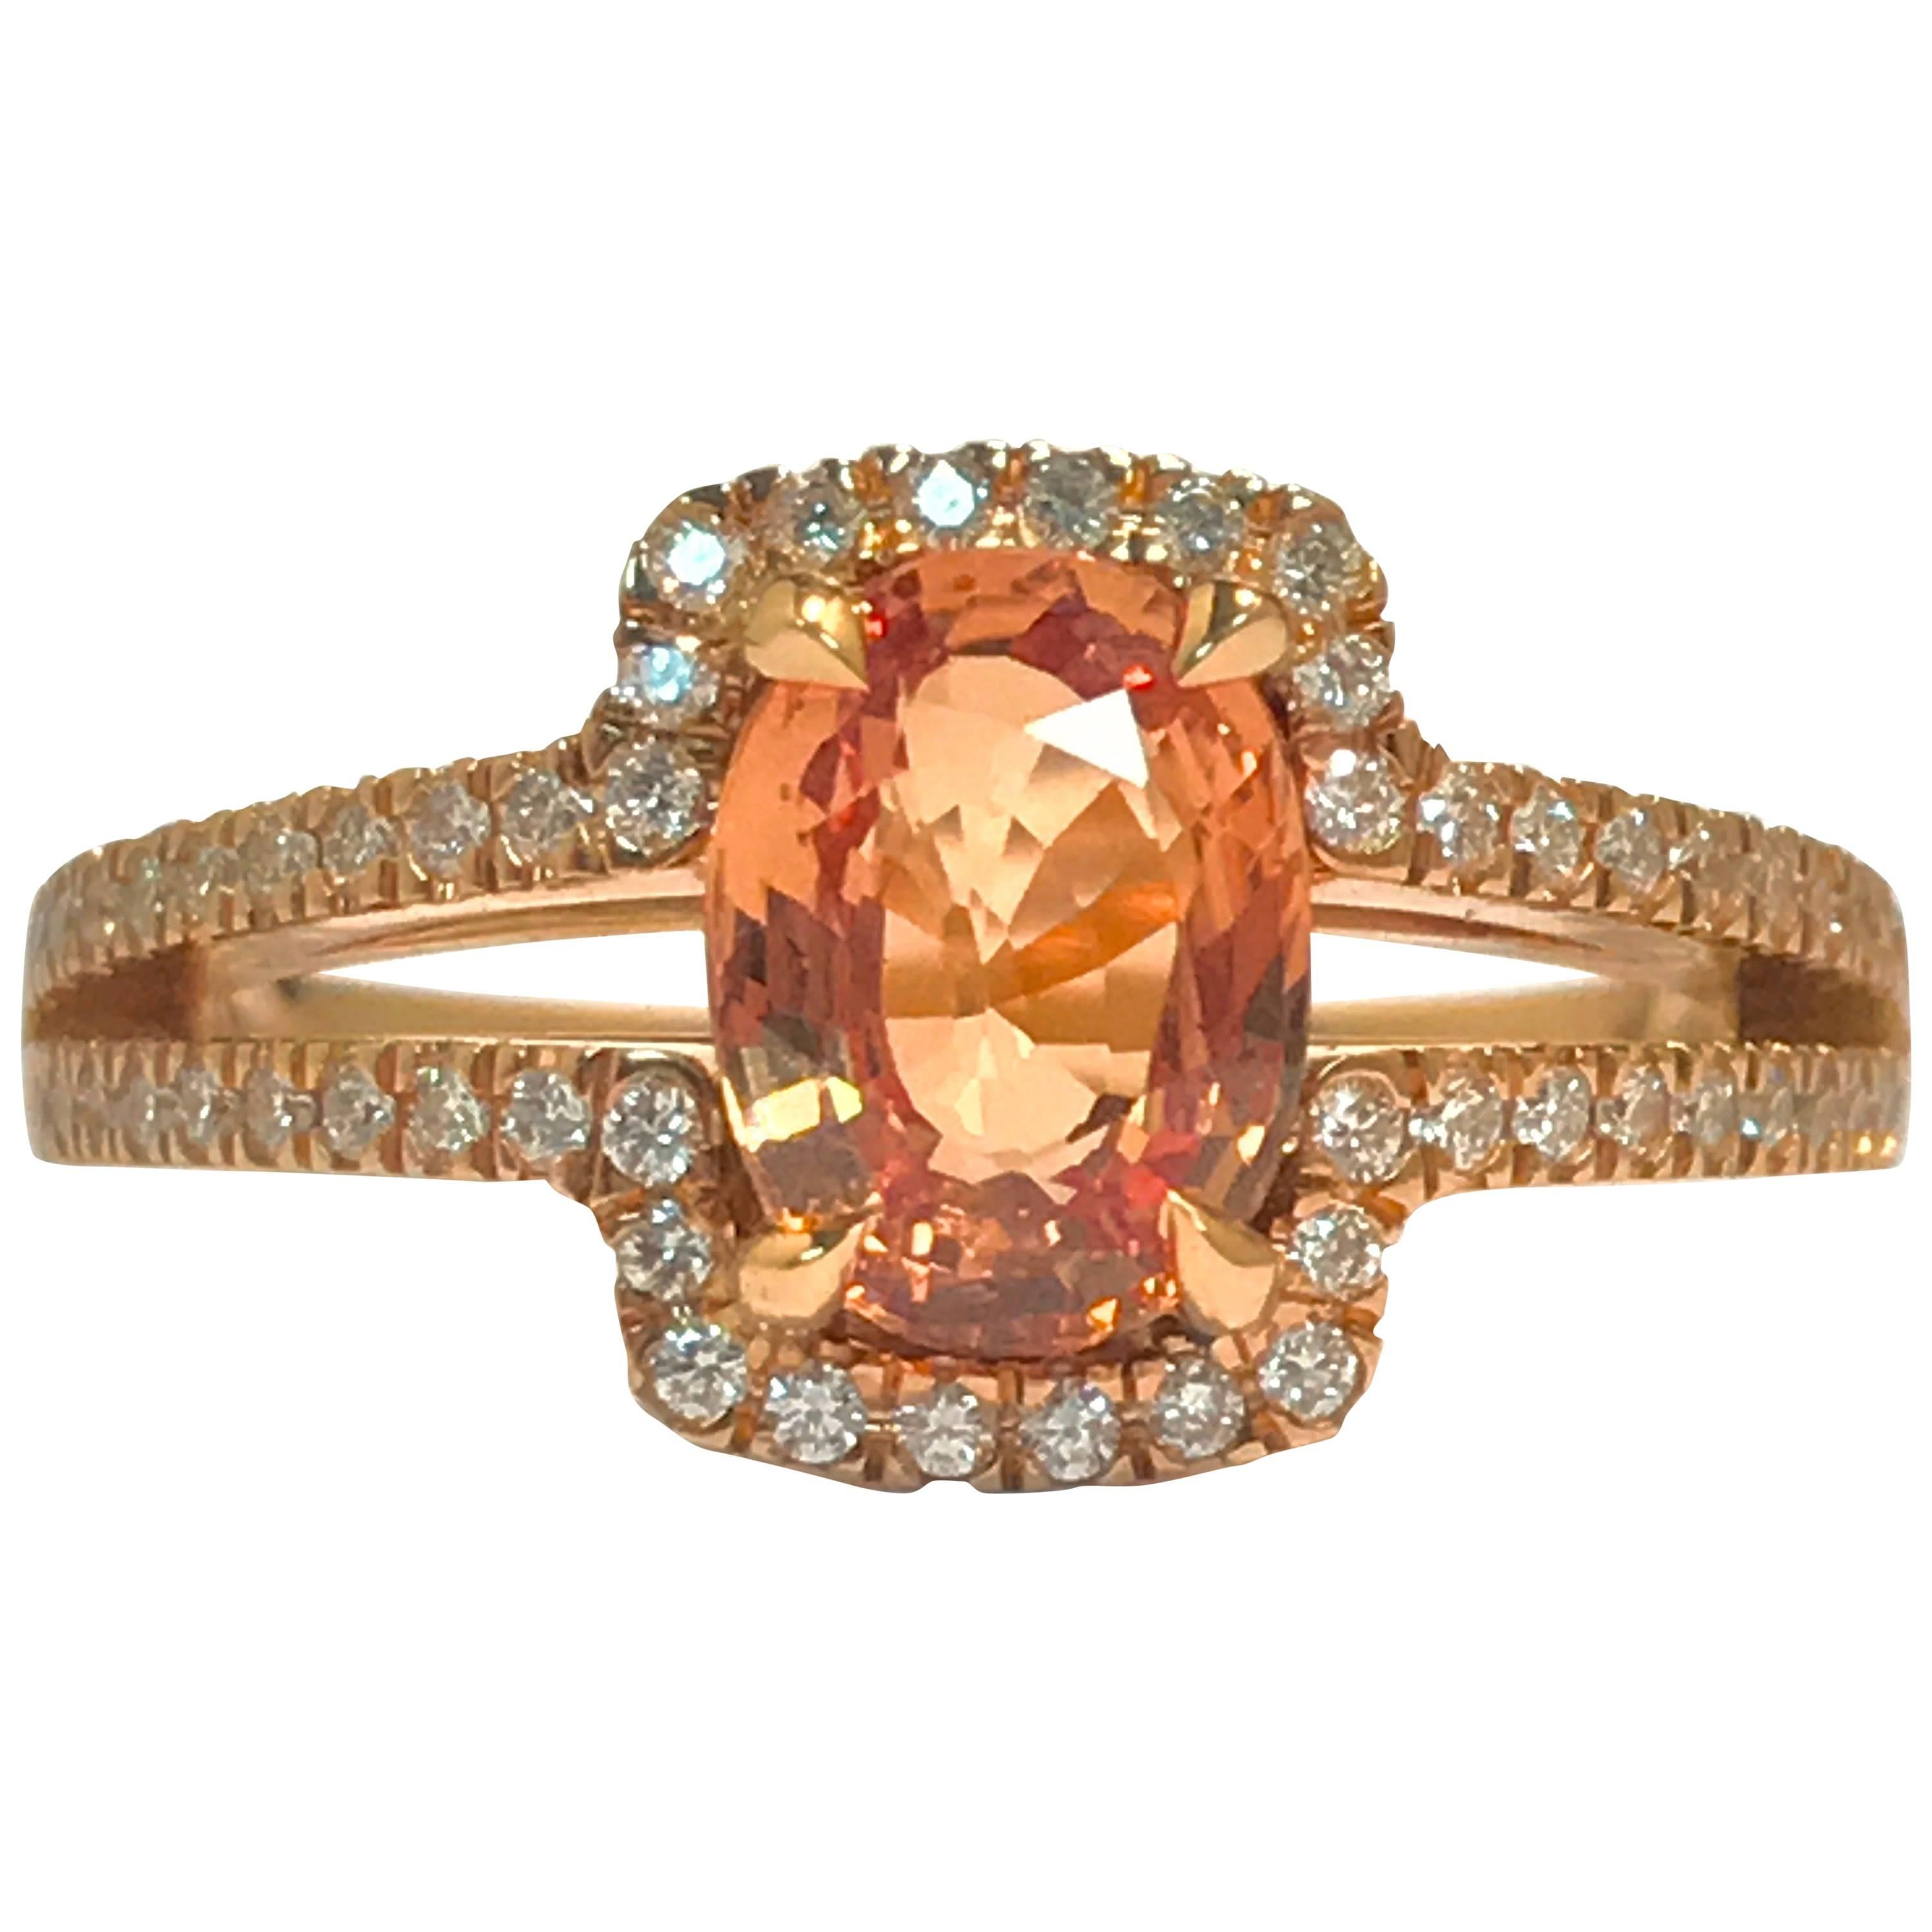 Orange Sapphire and Diamonds Pink Gold Ring